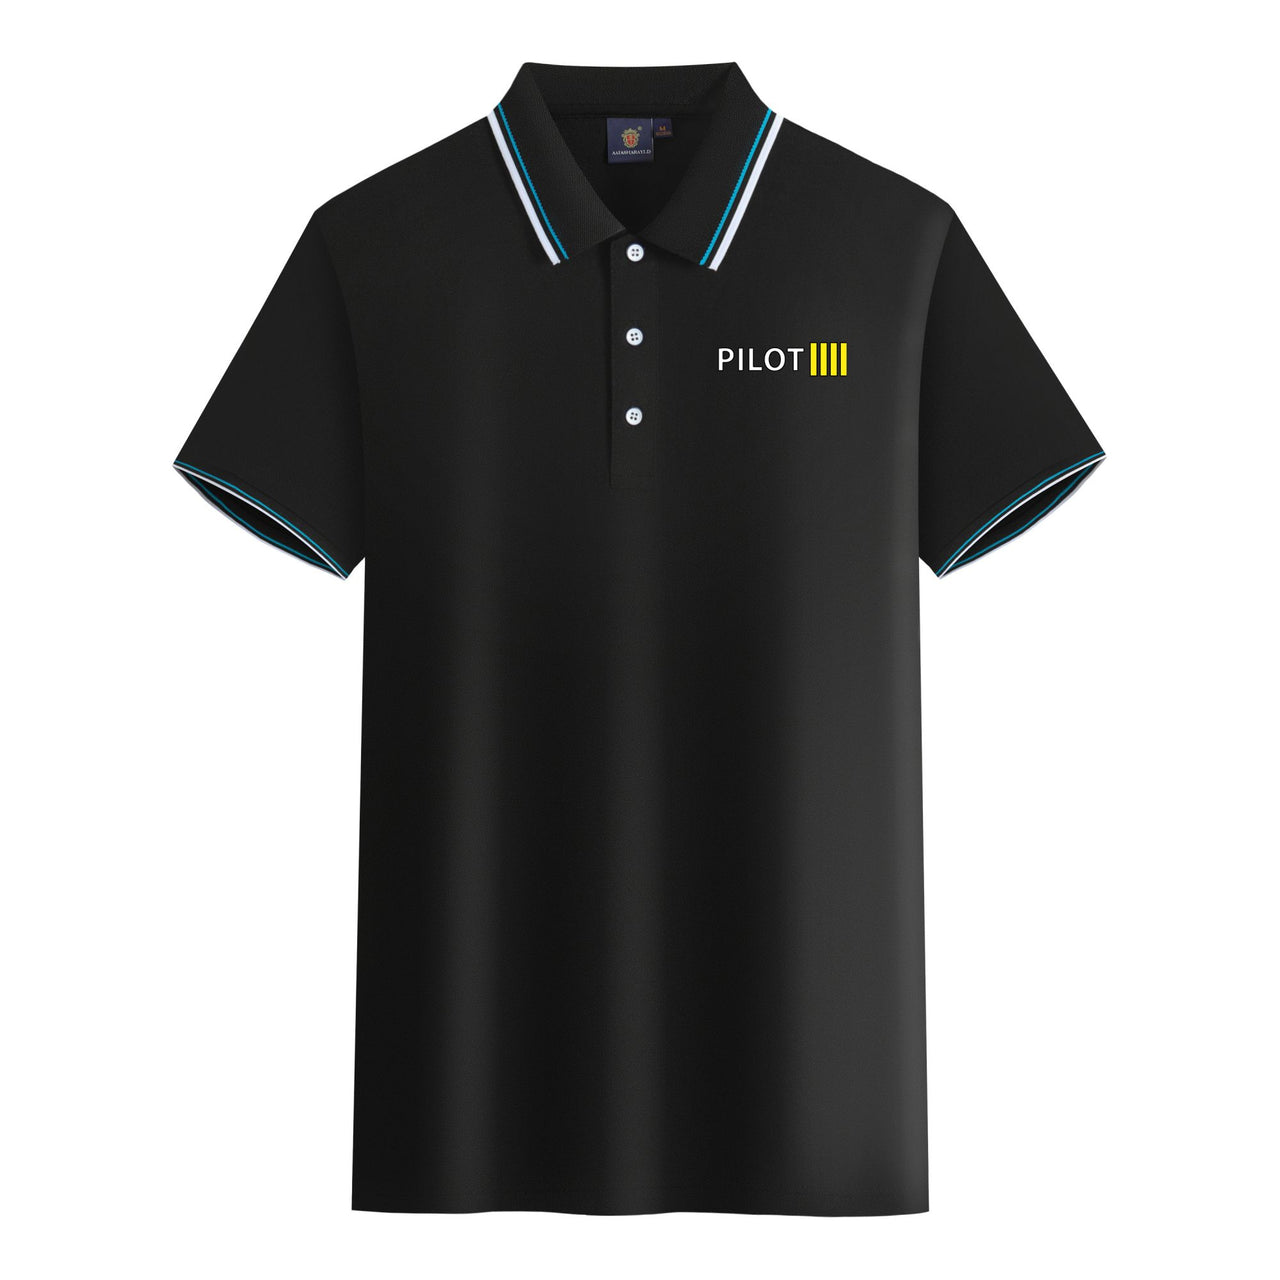 Pilot & Stripes (4 Lines) Designed Stylish Polo T-Shirts